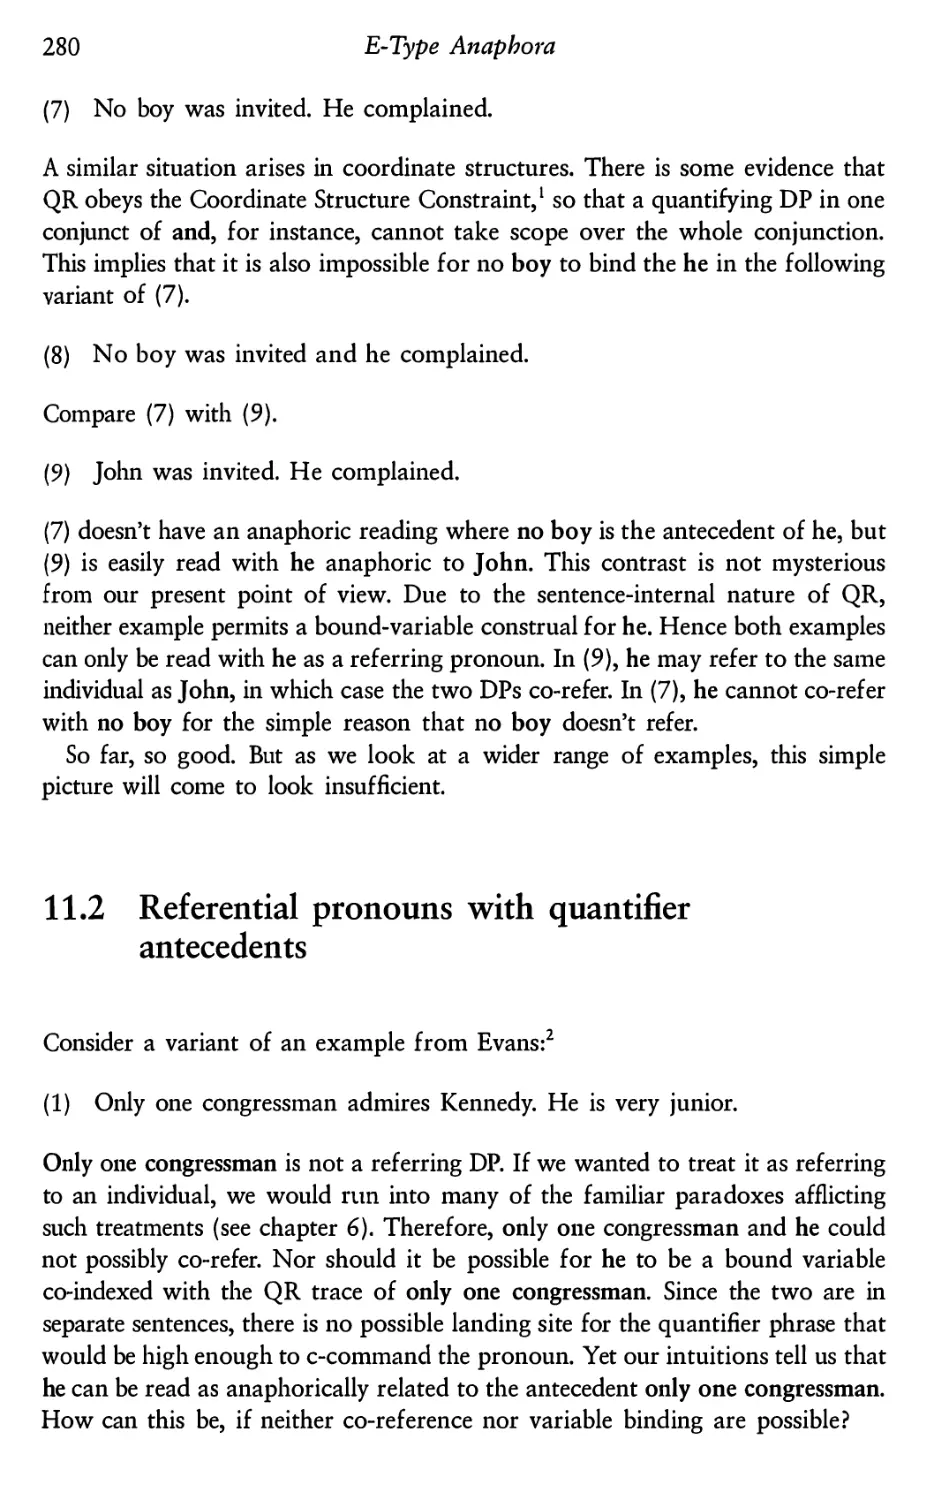 11.2 Referential pronouns with quantifier antecedents